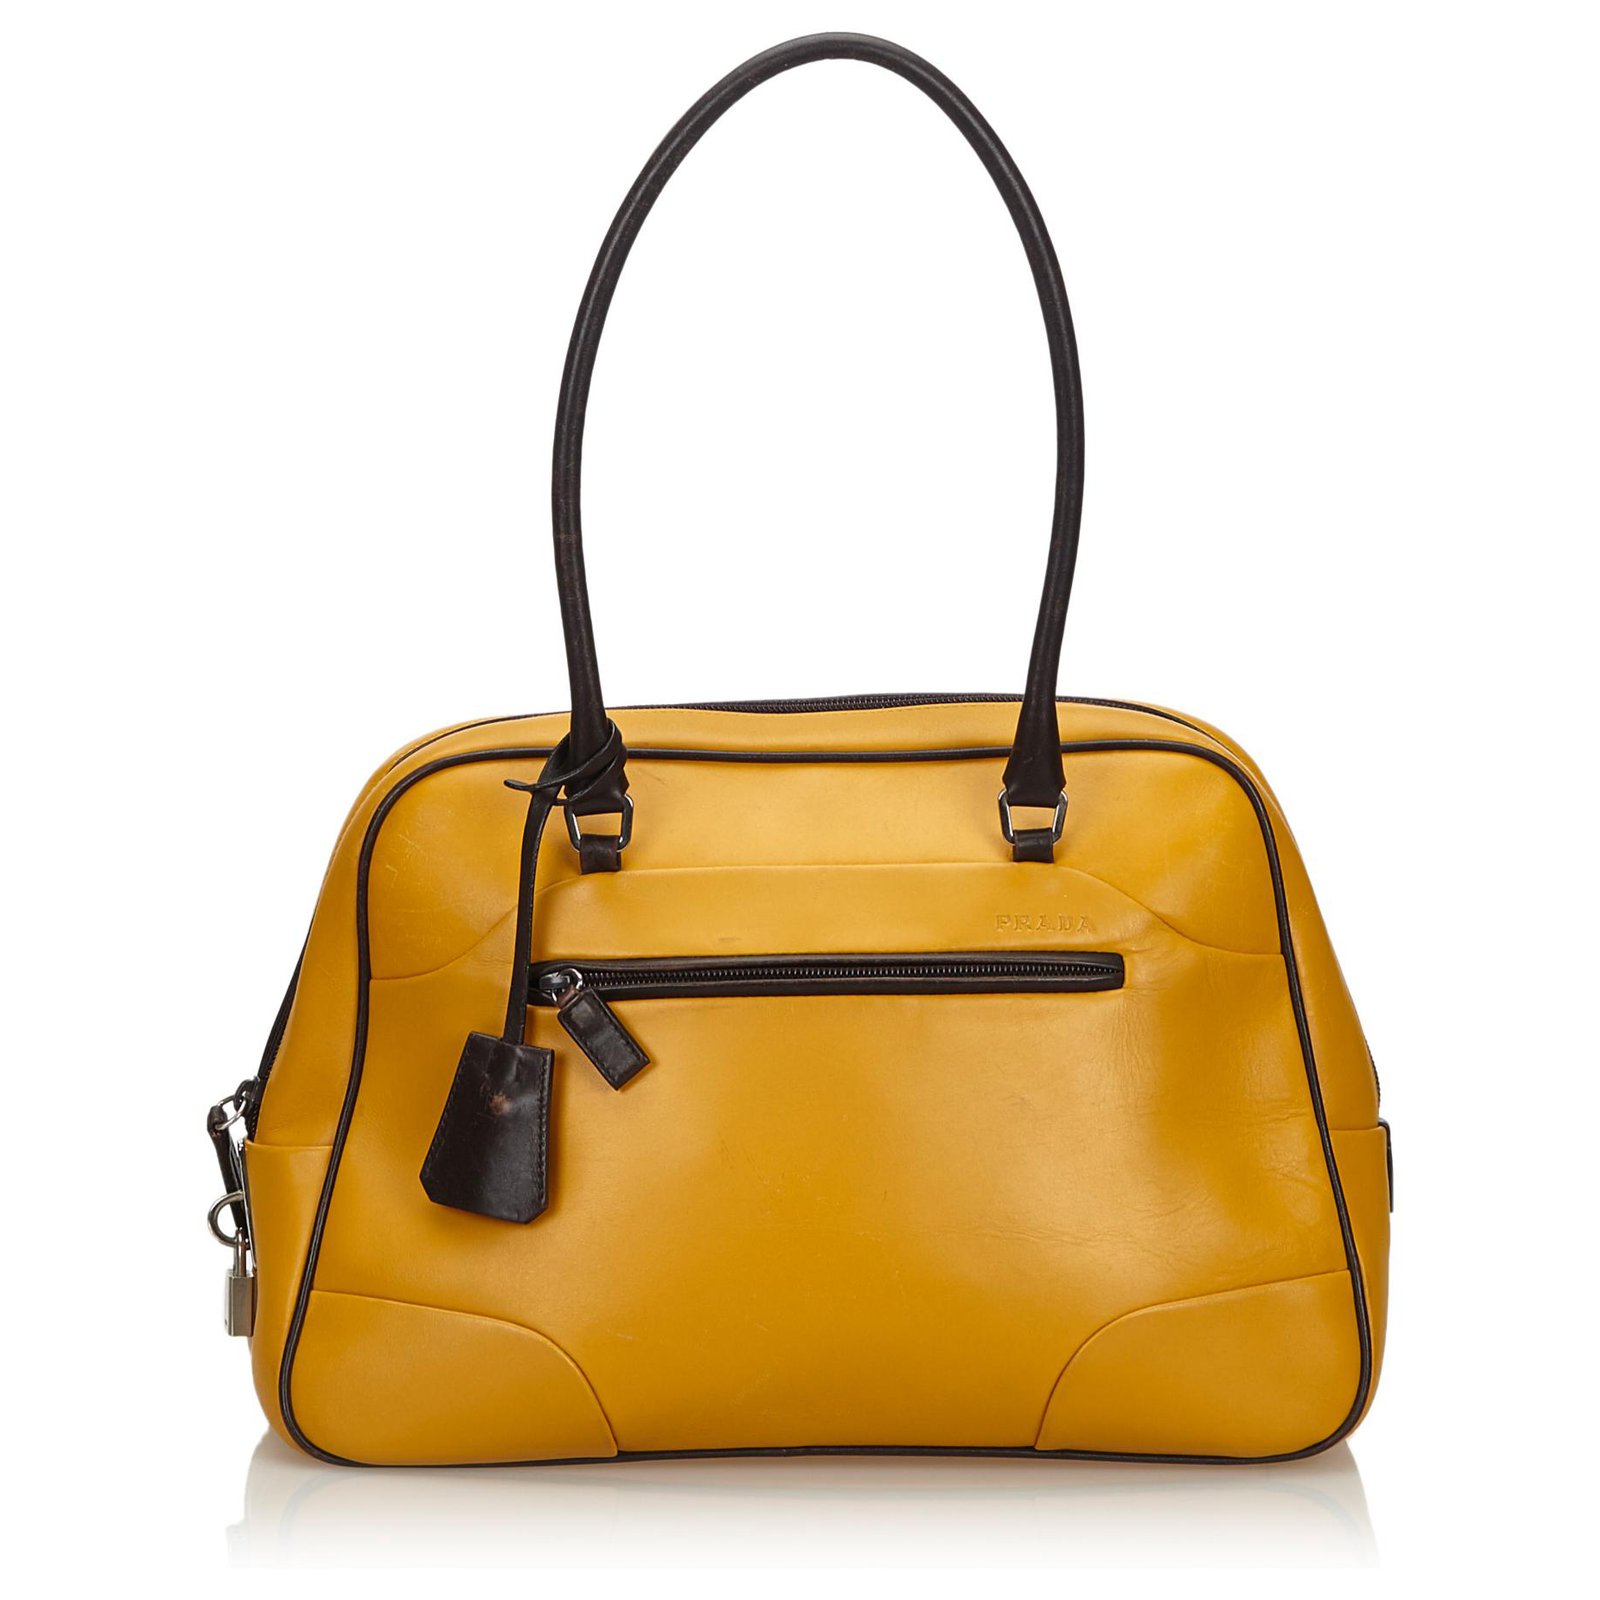 prada handbags orange leather